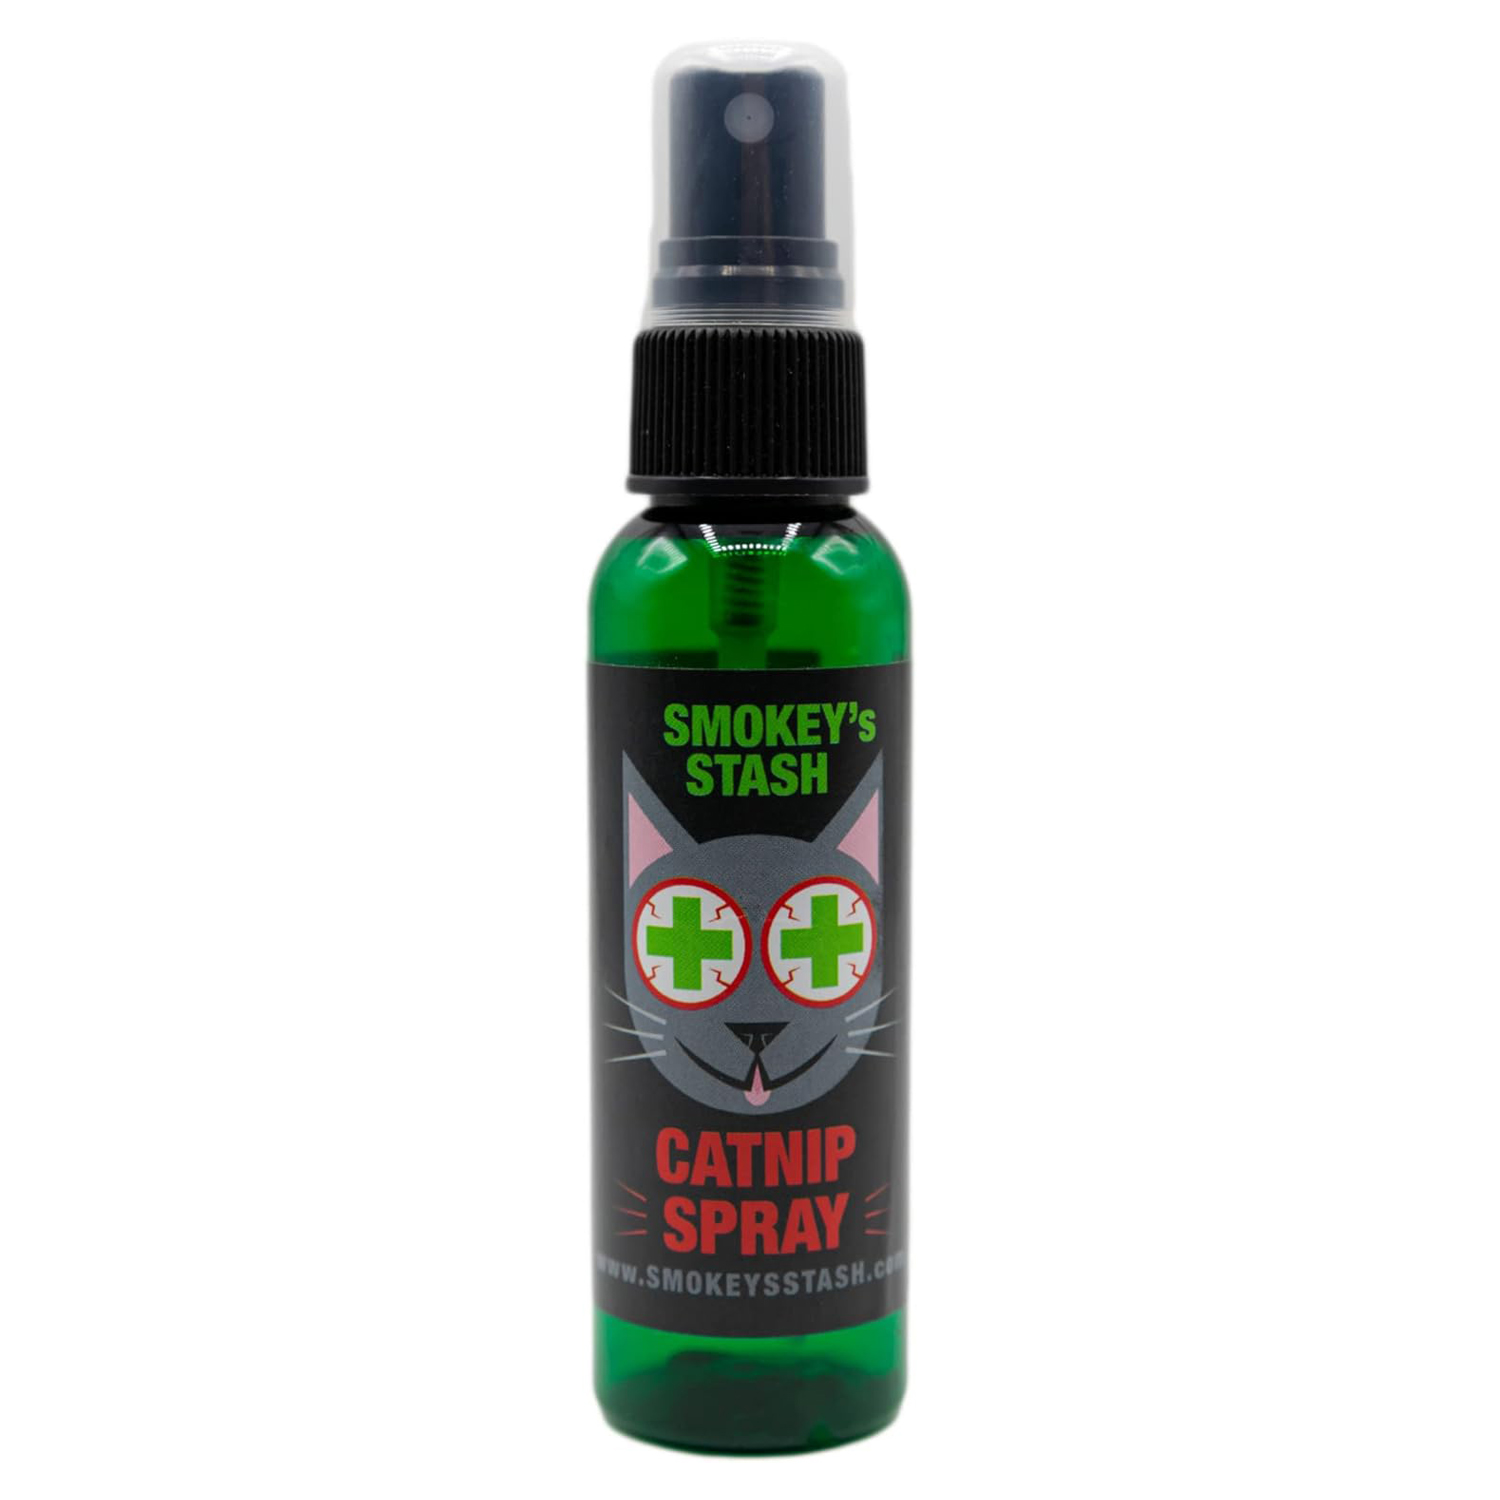 Smokey's Stash Catnip Spray for Cats